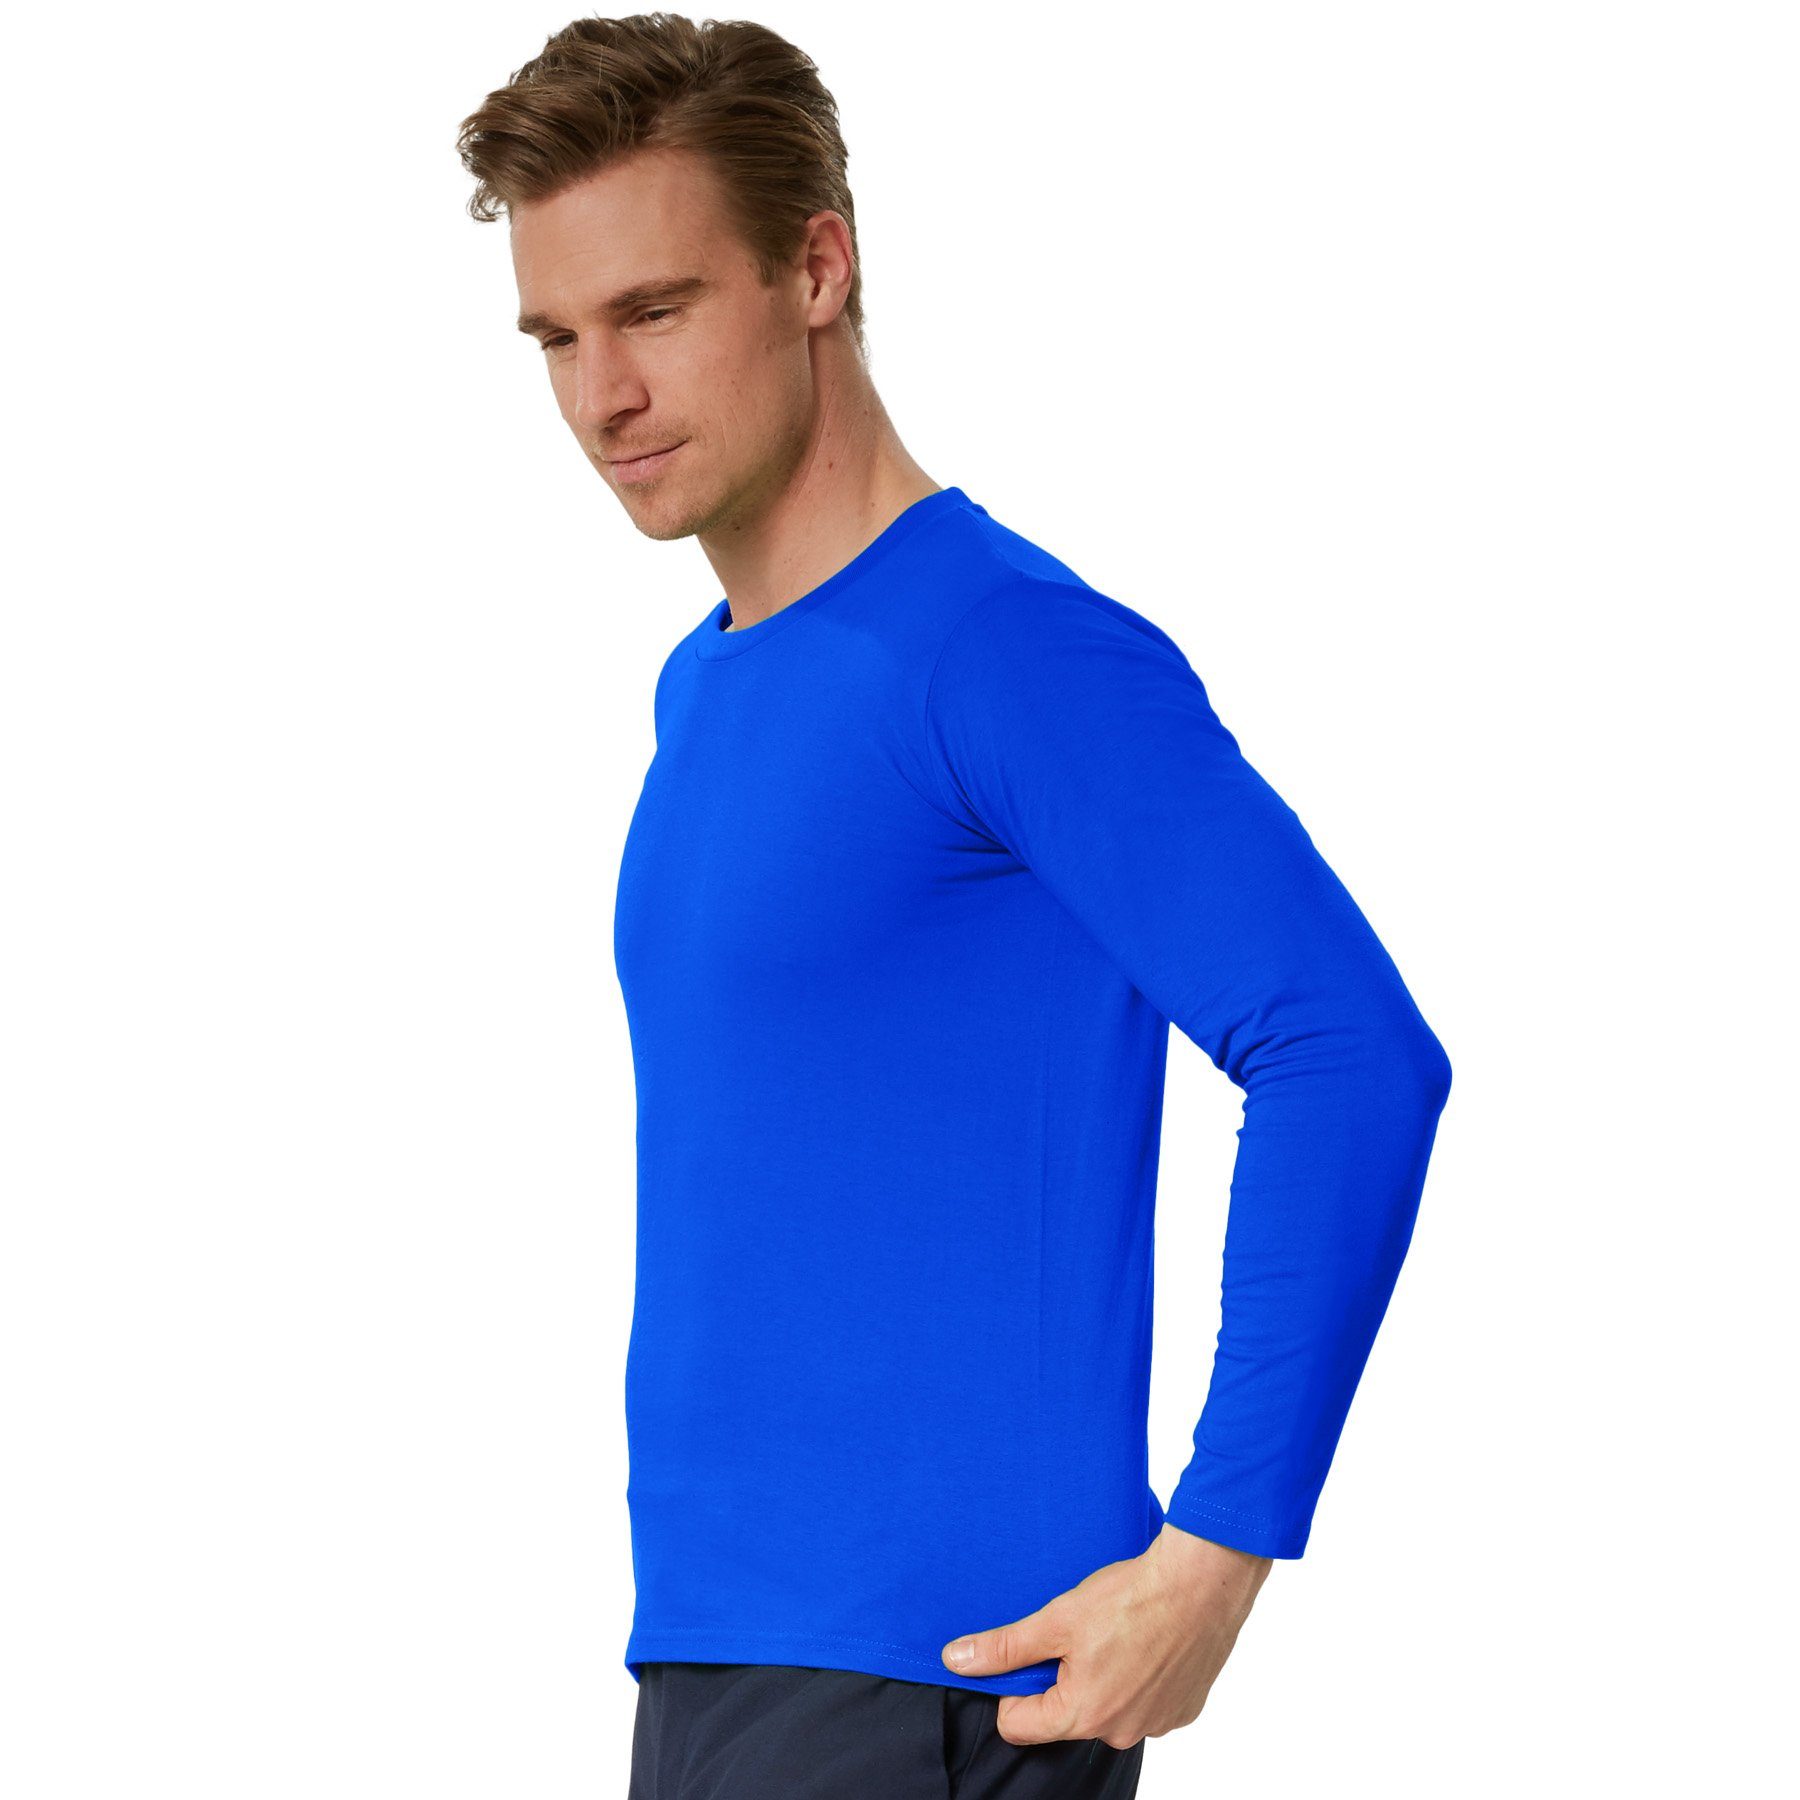 blau Longsleeve Männer Rundhals dressforfun Langarm-Shirt